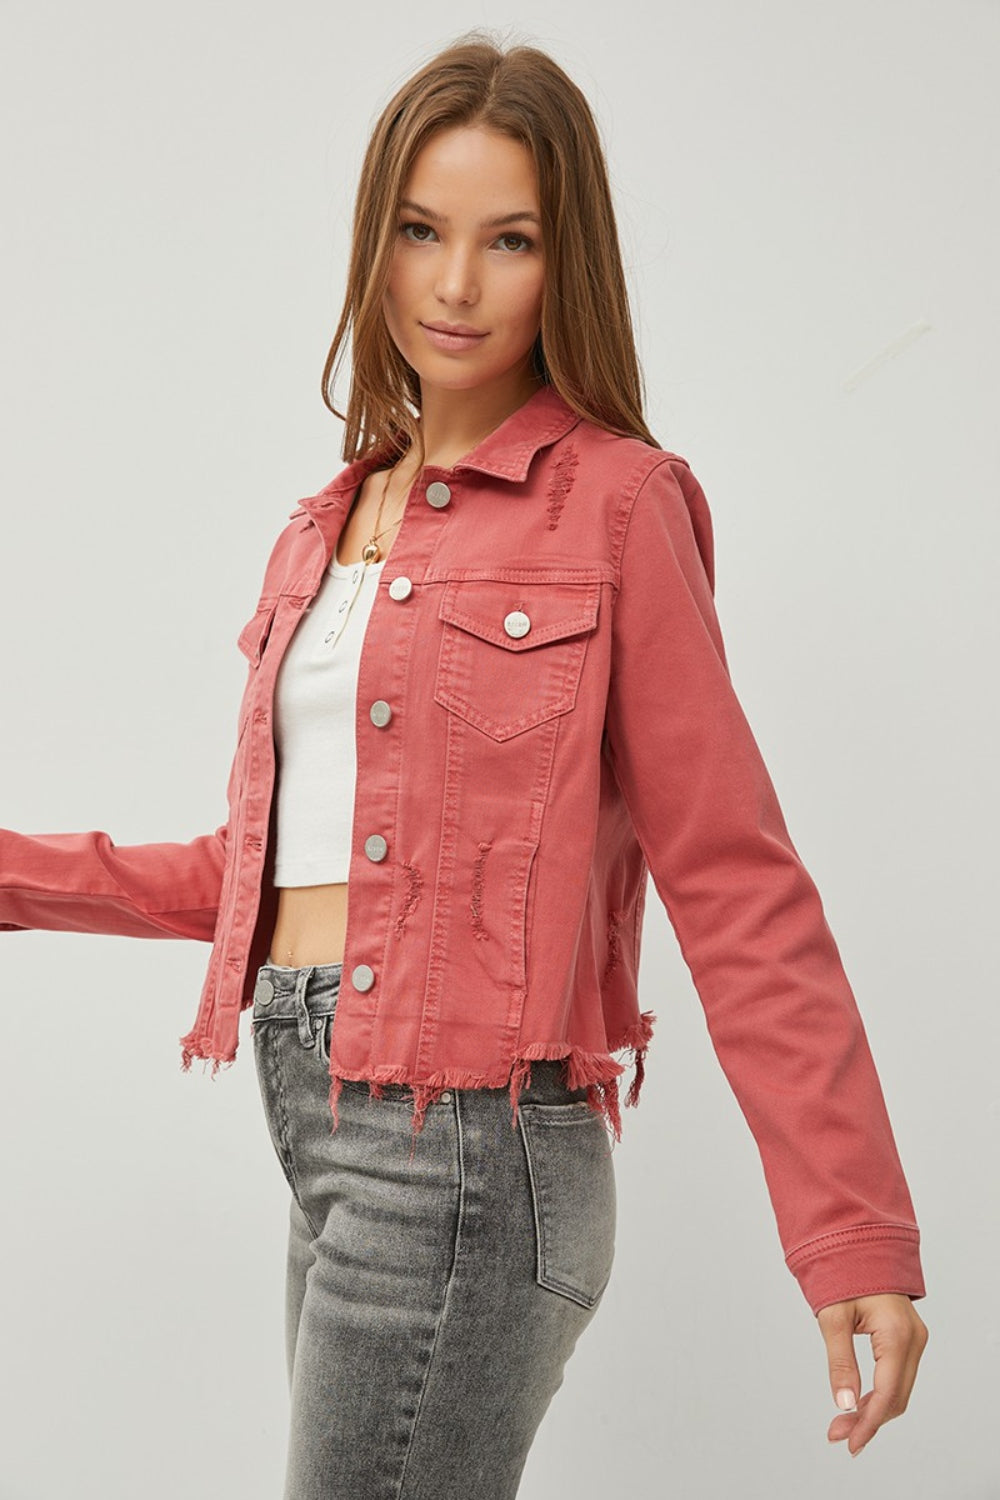 KESLEY Denim Jacket Pink Red Raw Hem Button Up Cropped Women's Jean Jacket